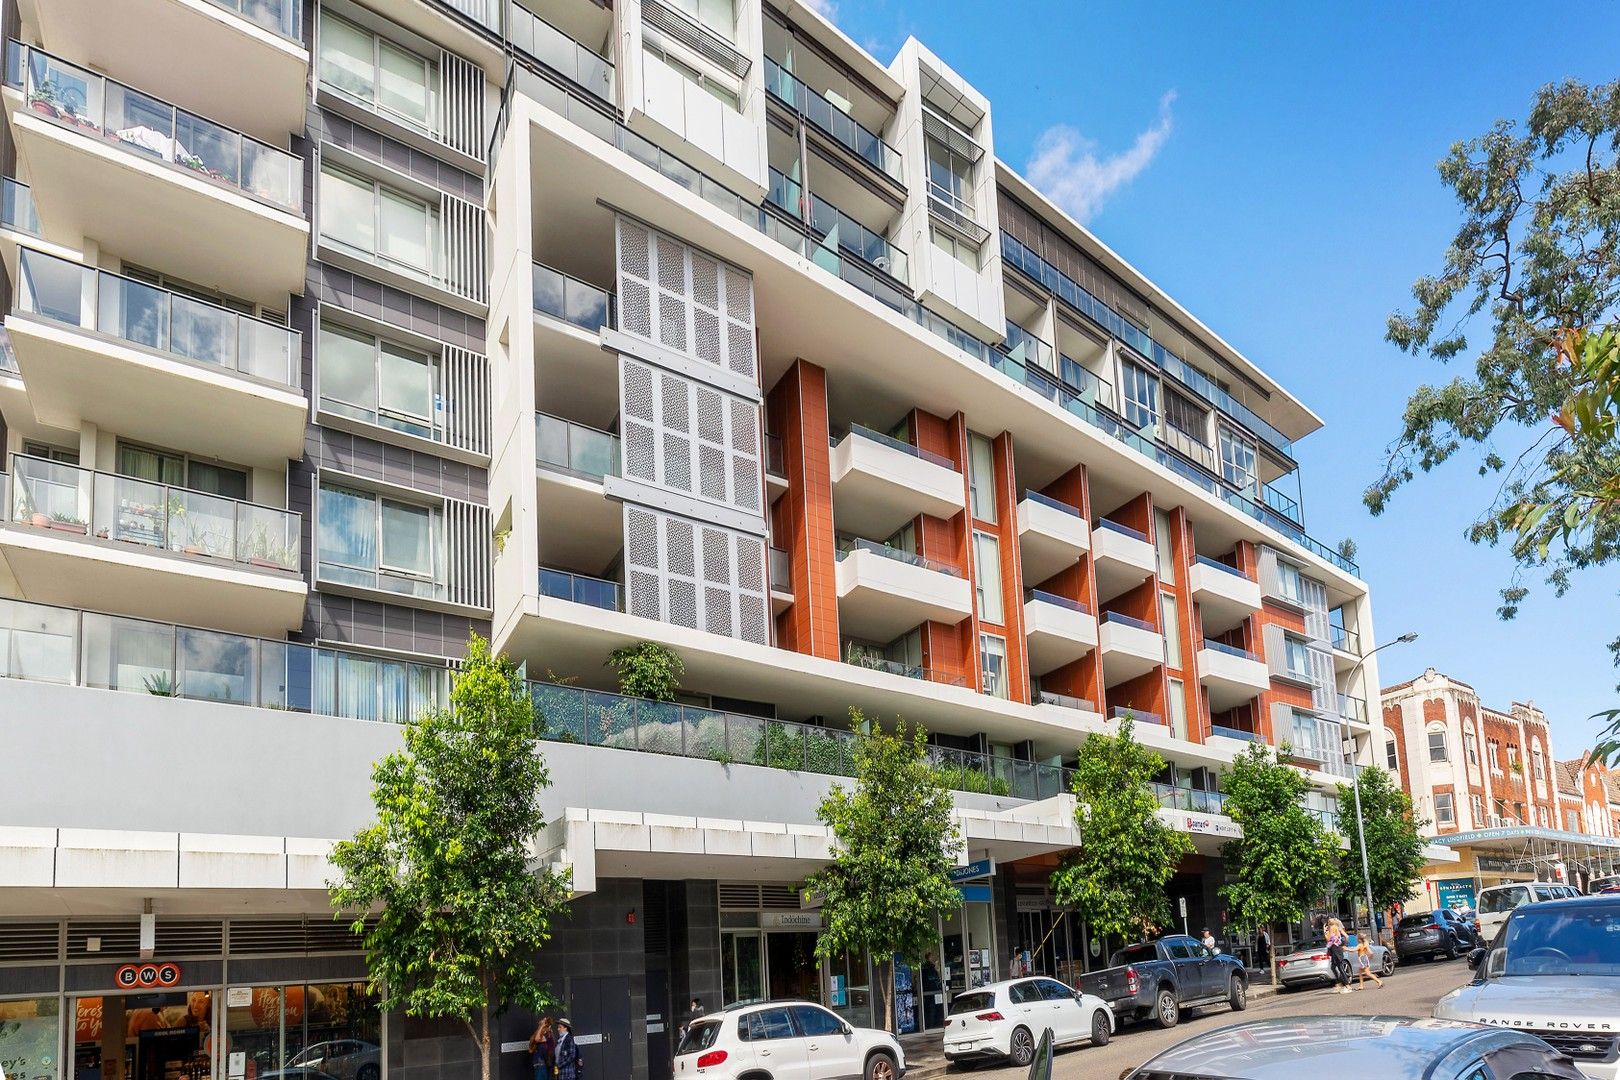 204/3 Havilah Lane, Lindfield NSW 2070 - Apartment For Rent - $700 | Domain